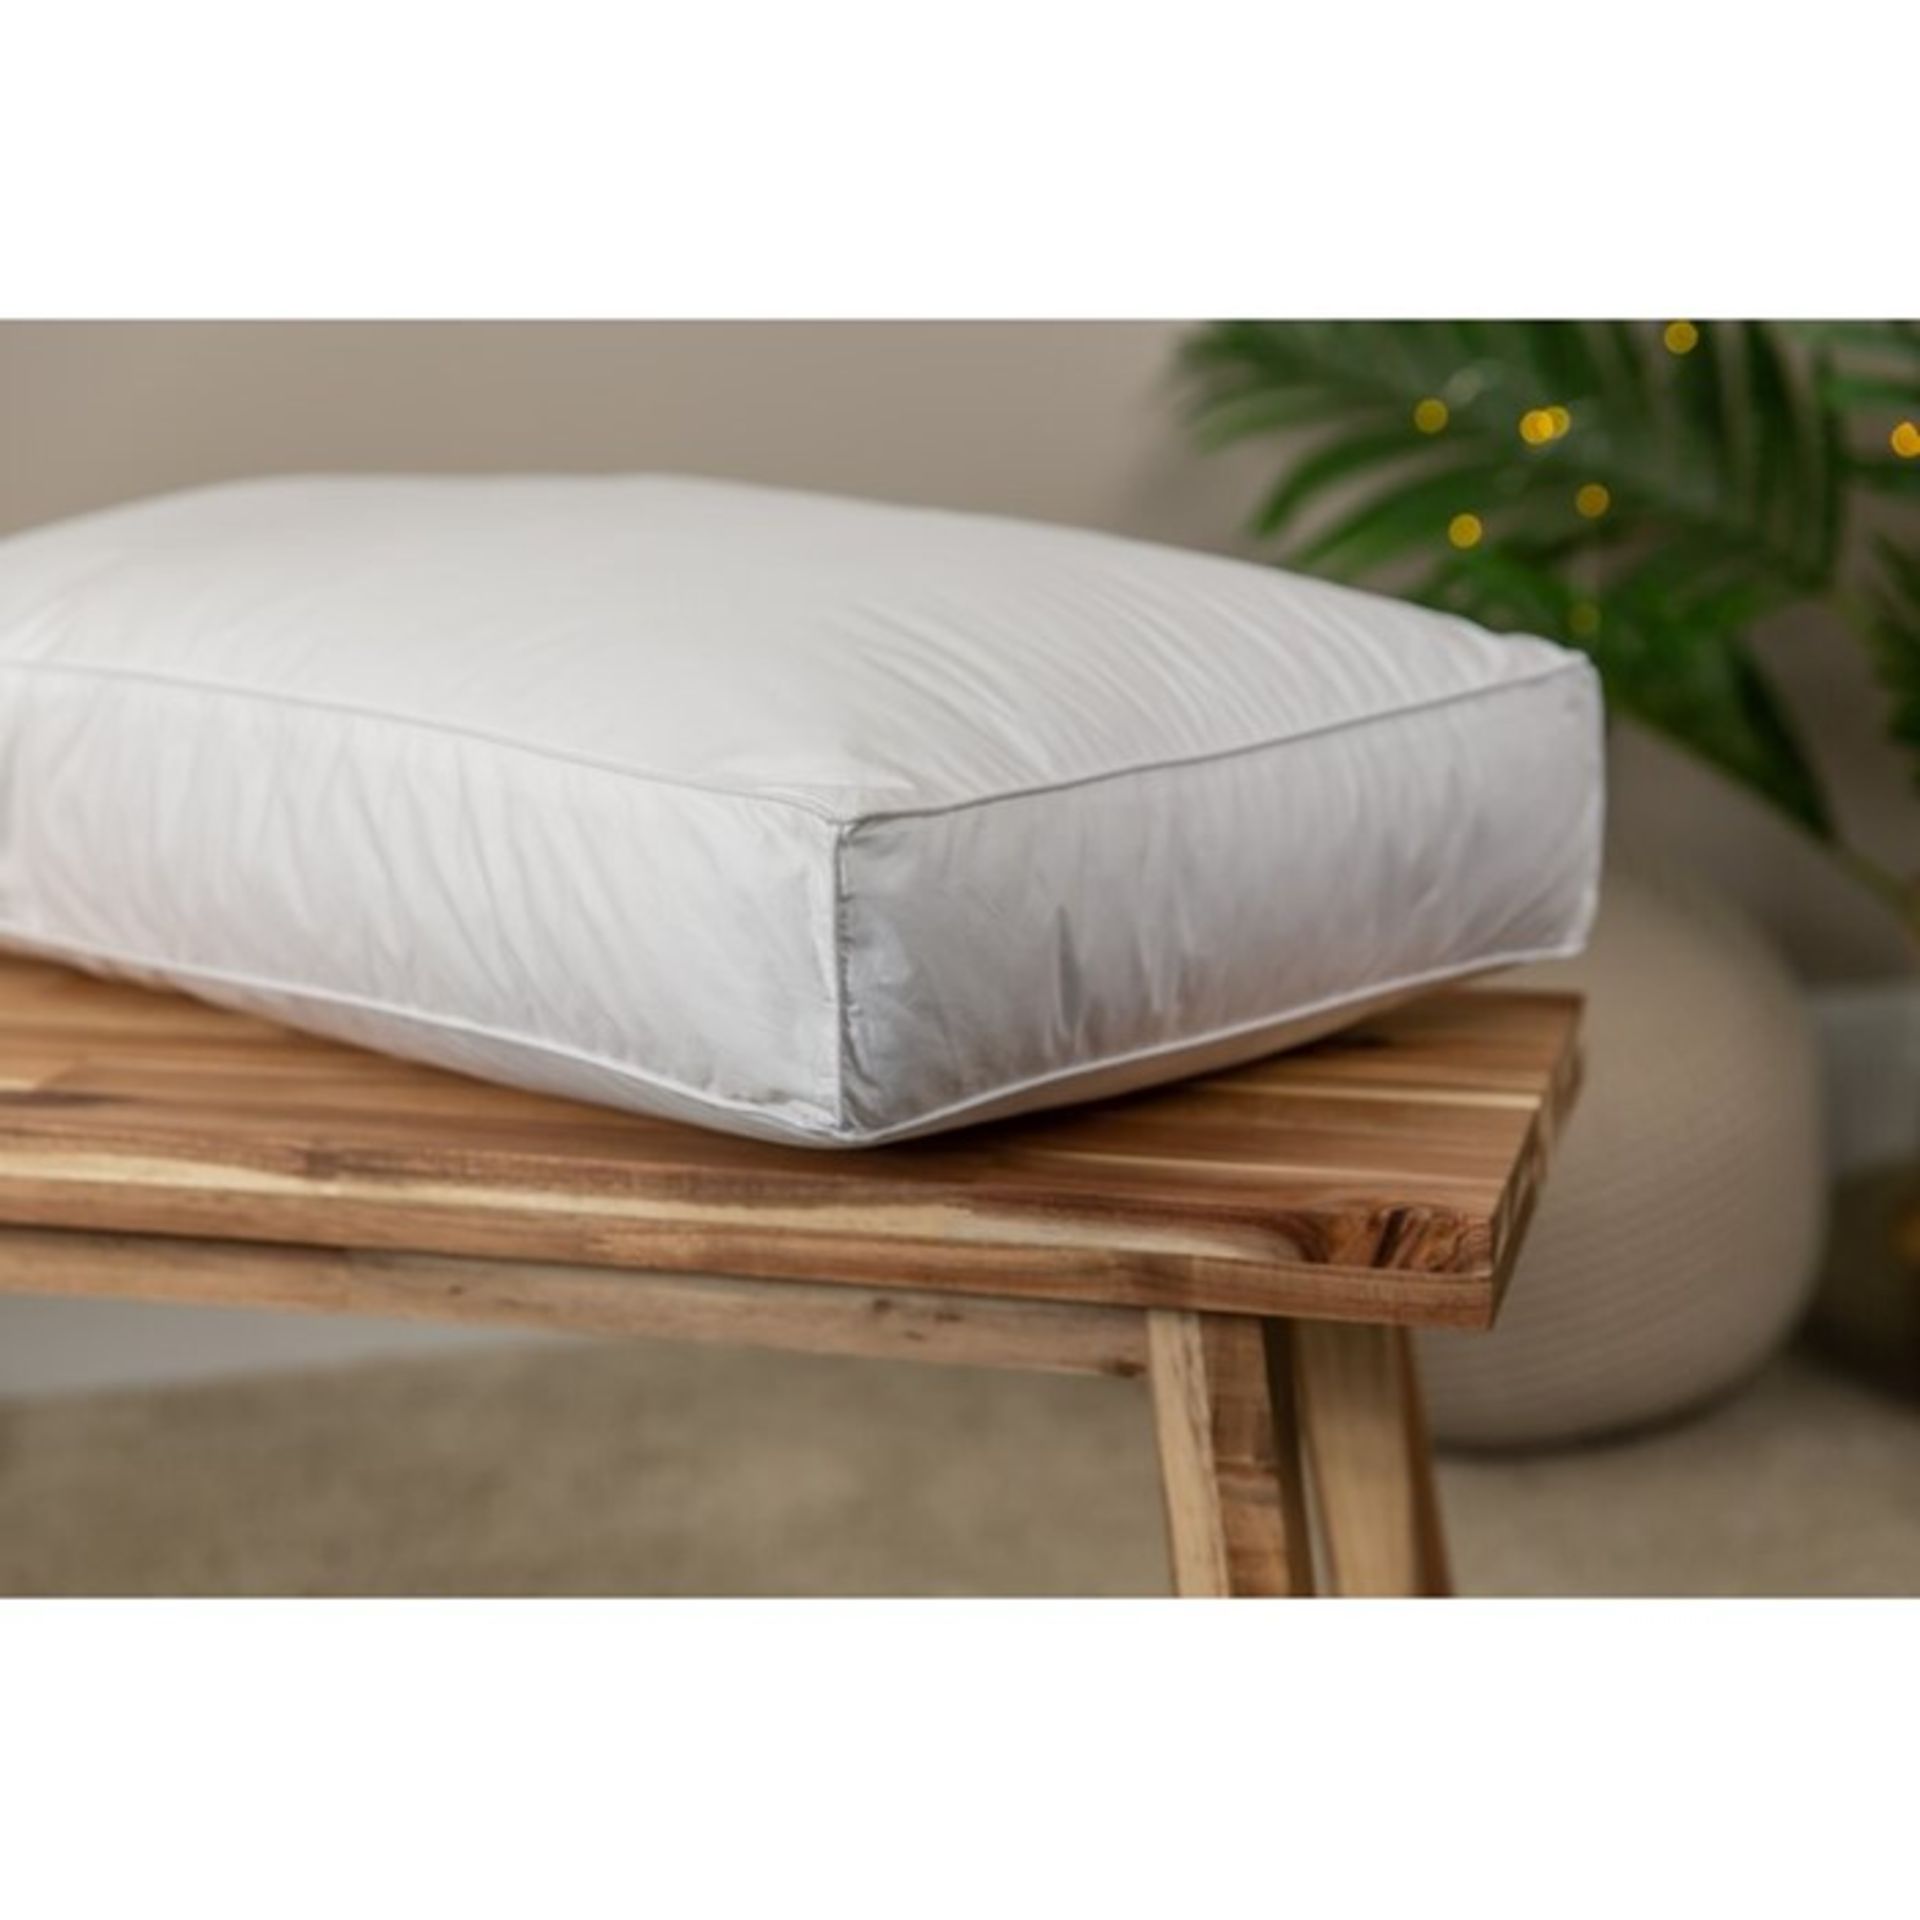 Snuggledown, Side Sleeper Pillow - RRP £23.99 (SGON1012.25188810 - H17228 - 11/56) 8C